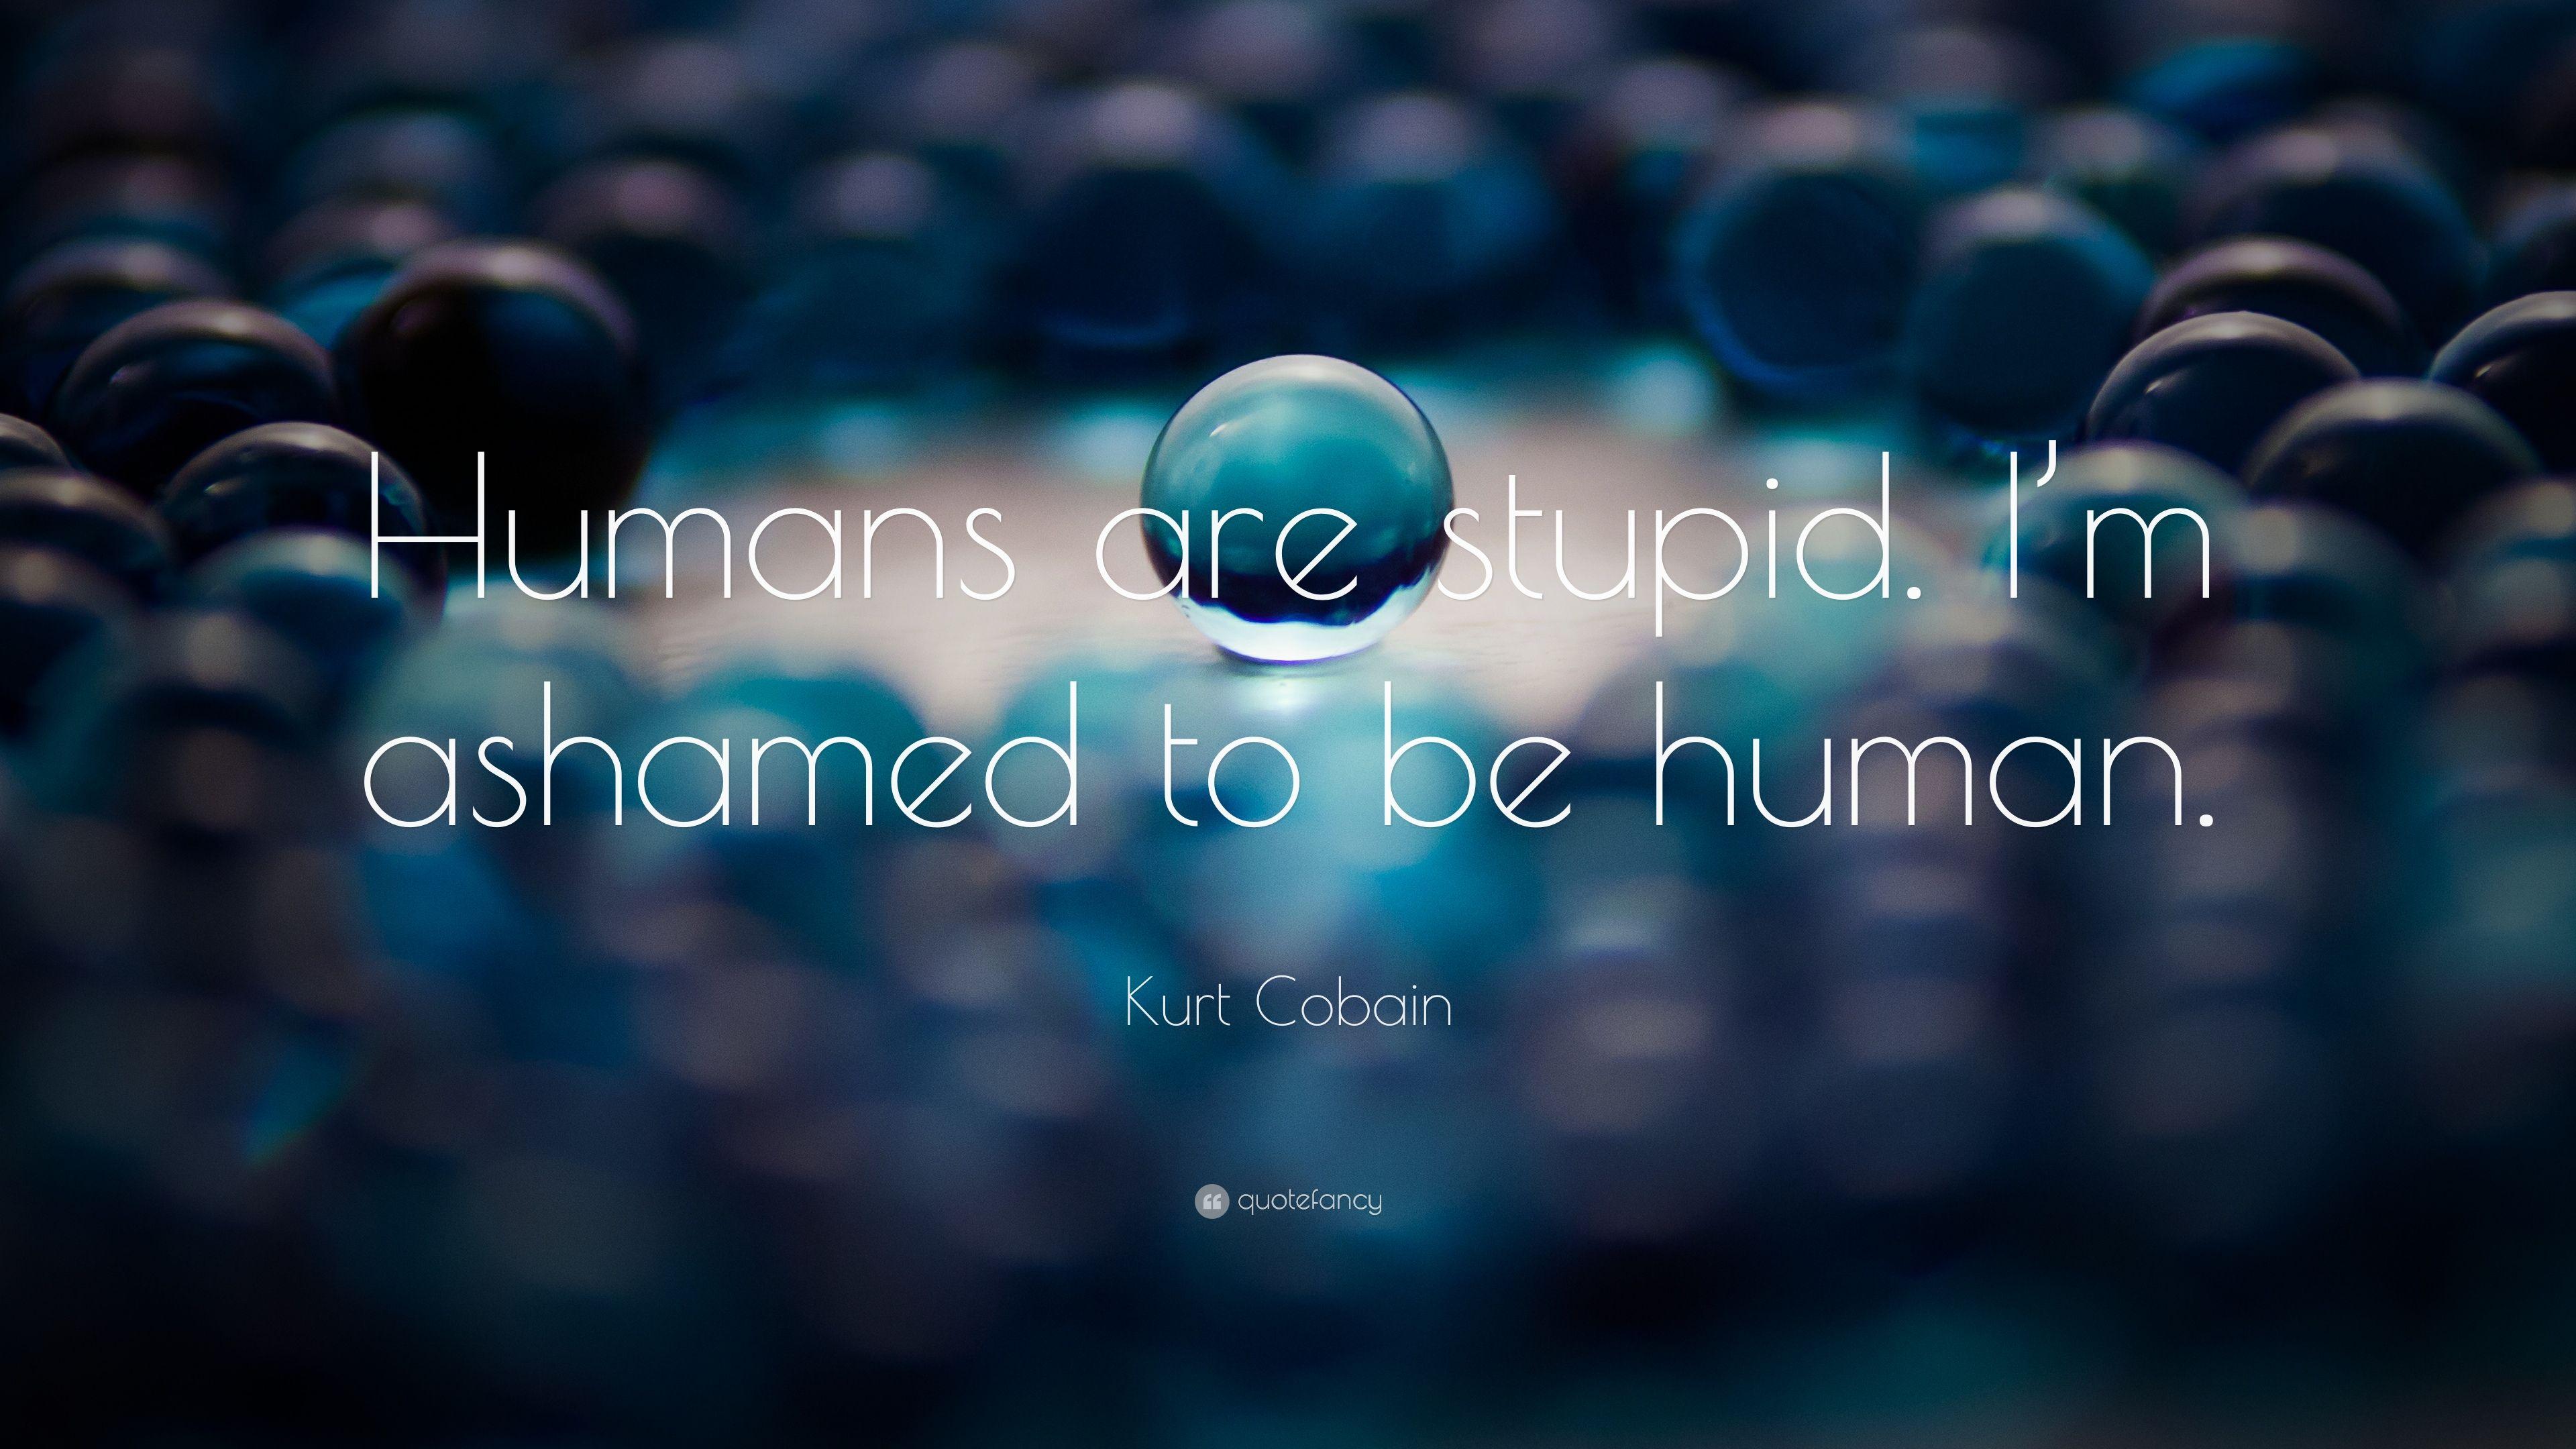 Kurt Cobain Quote: “Humans are stupid. I'm ashamed to be human